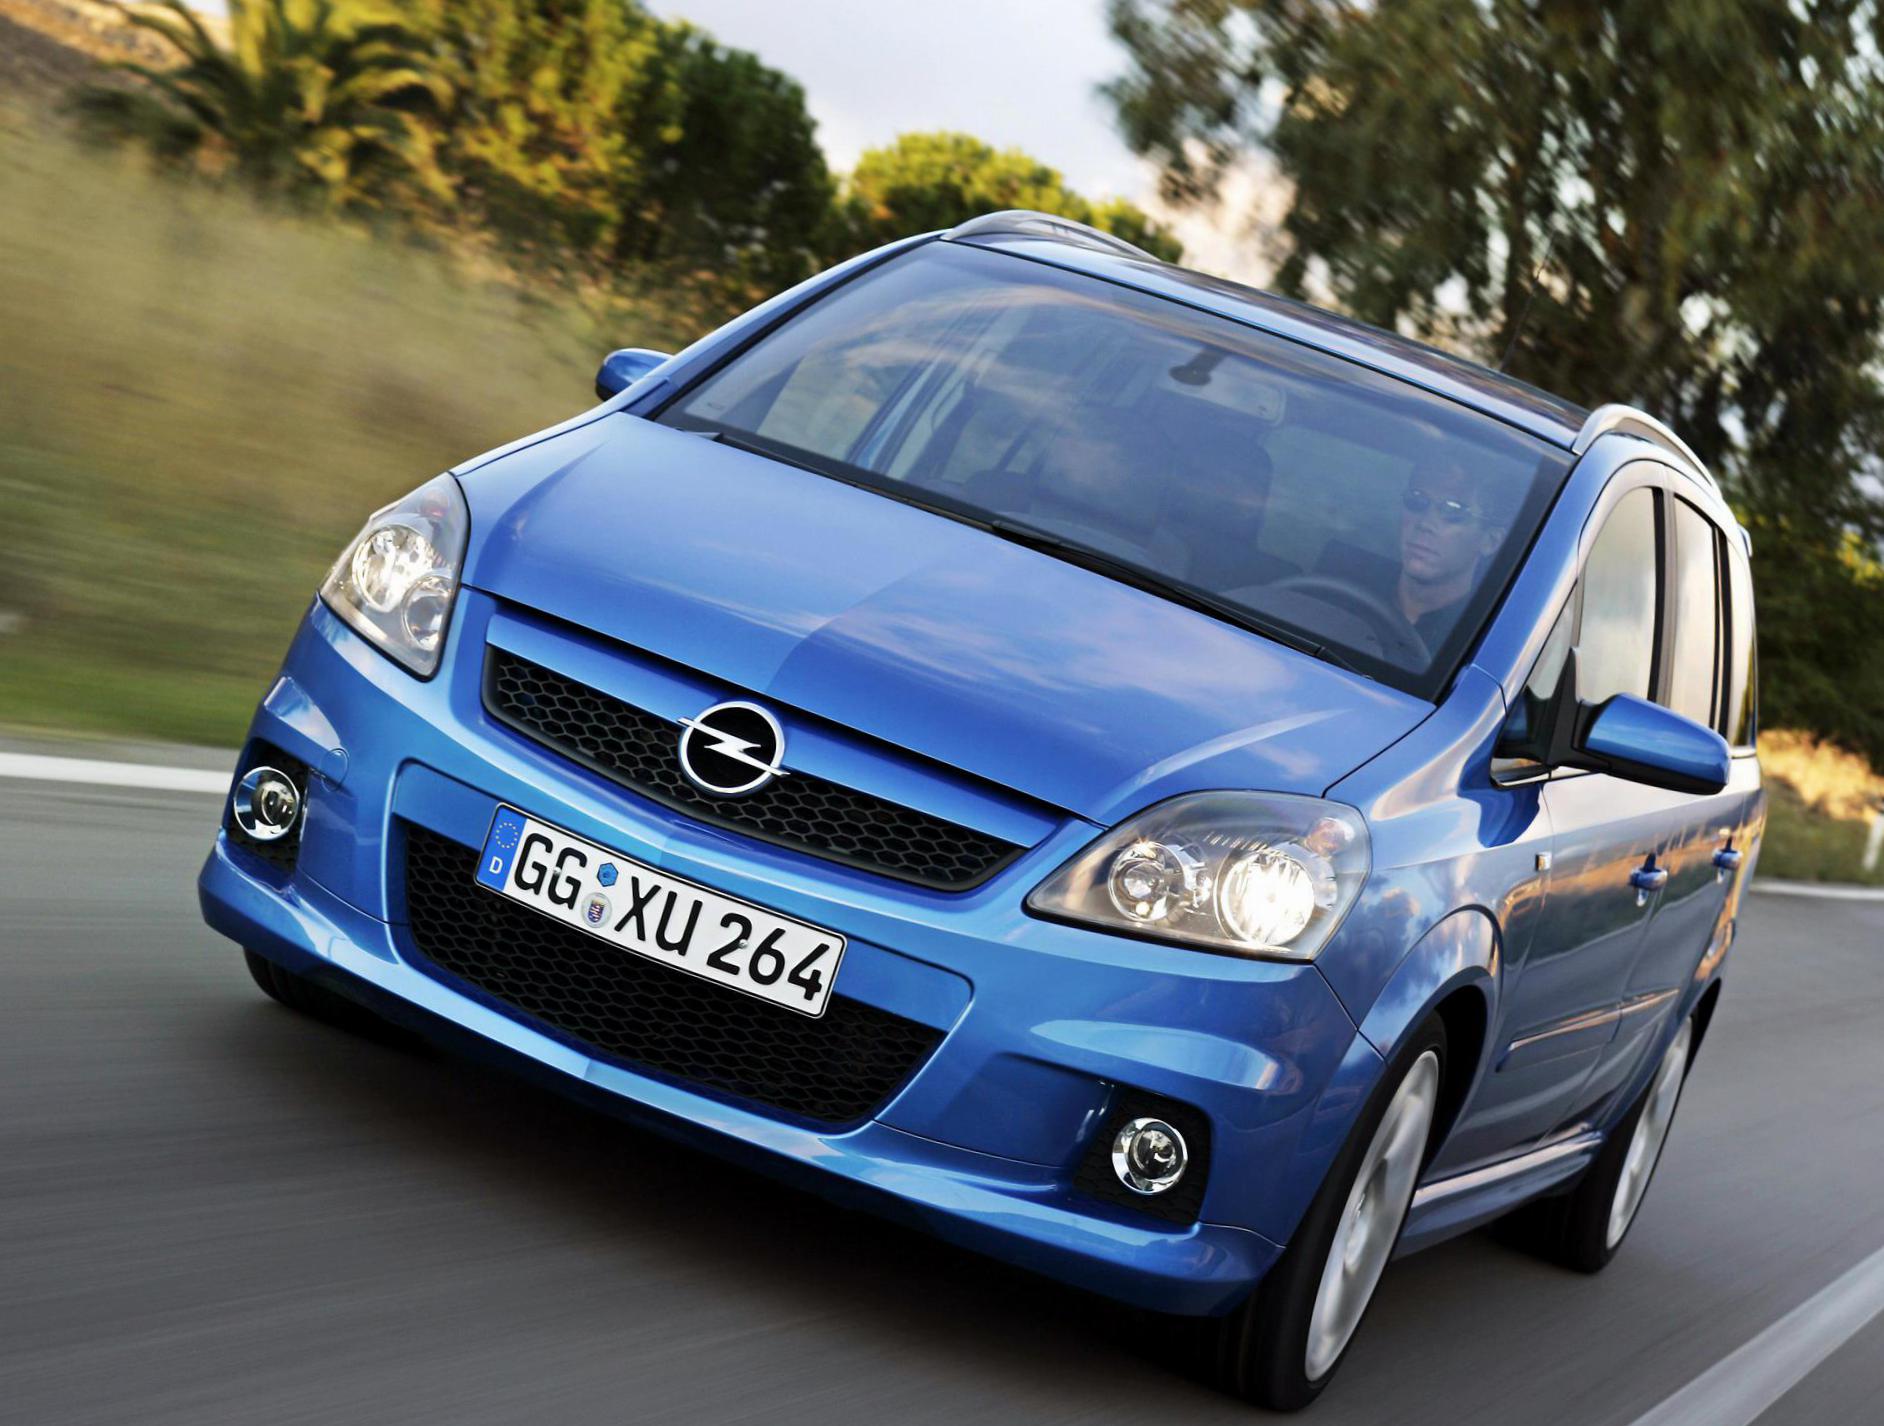 Opel Zafira B reviews 2014